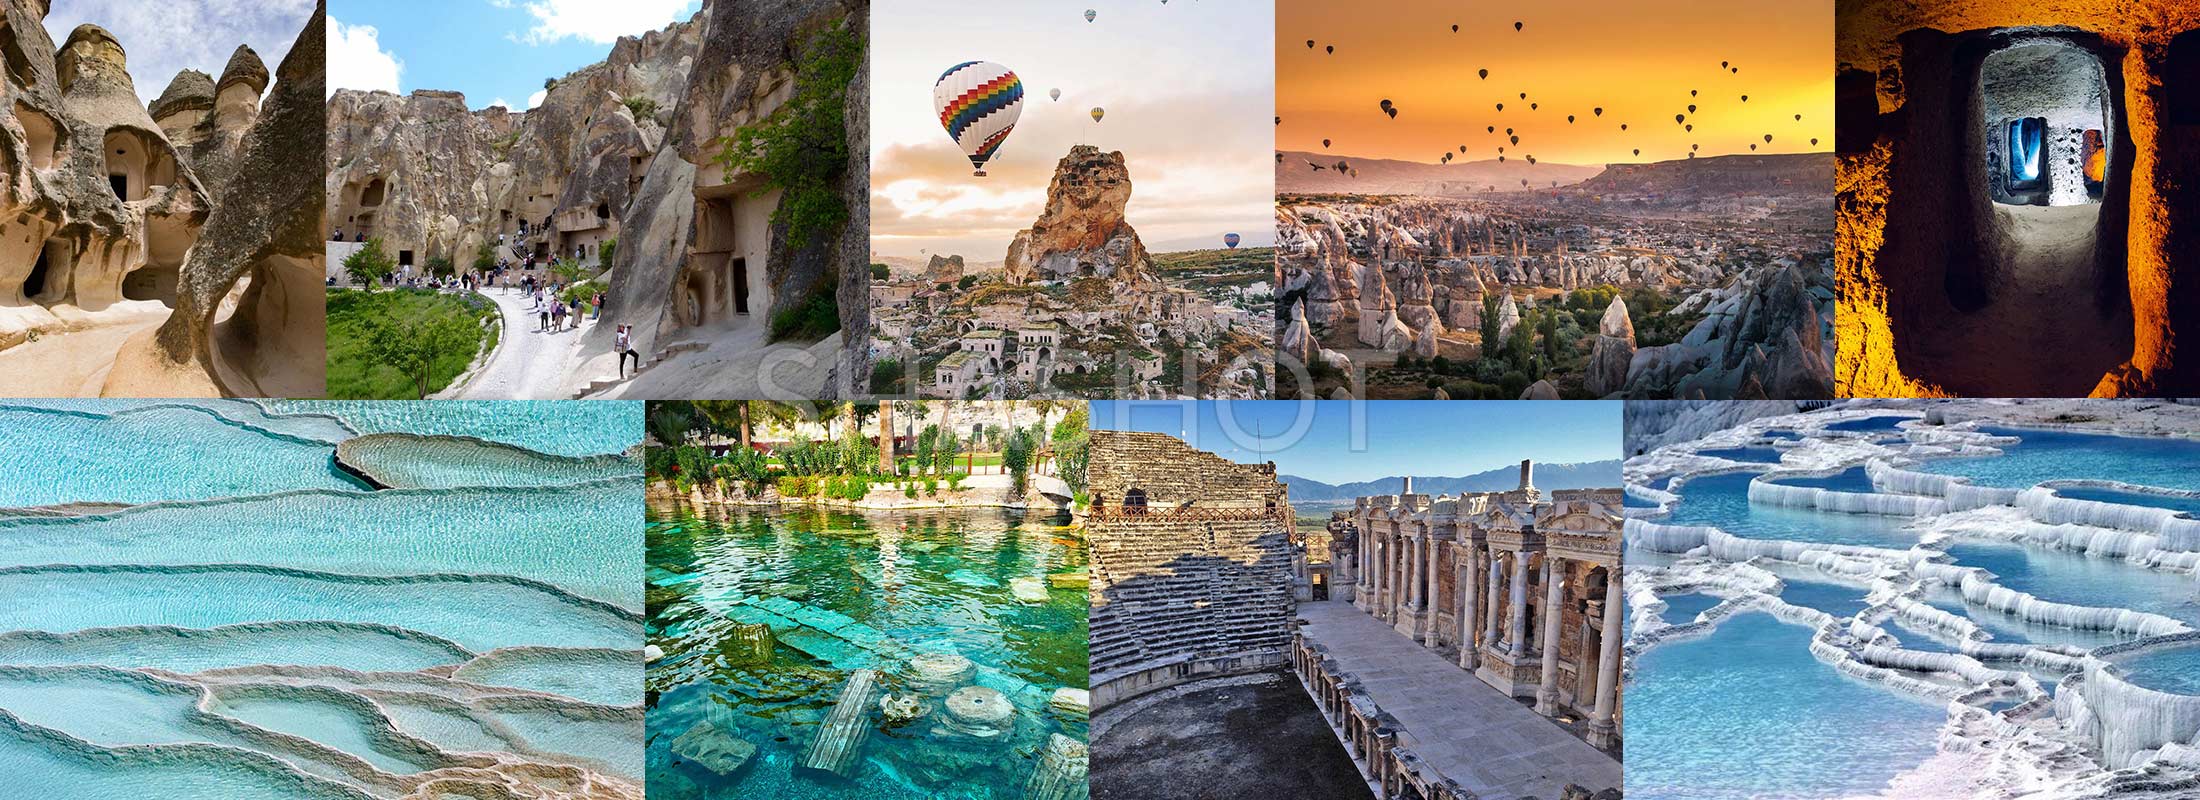 3-DAYS-TURKEY-PACKAGE-TOUR-CAPPADOCIA-PAMUKKALE-HIERAPOLIS-BY-bus